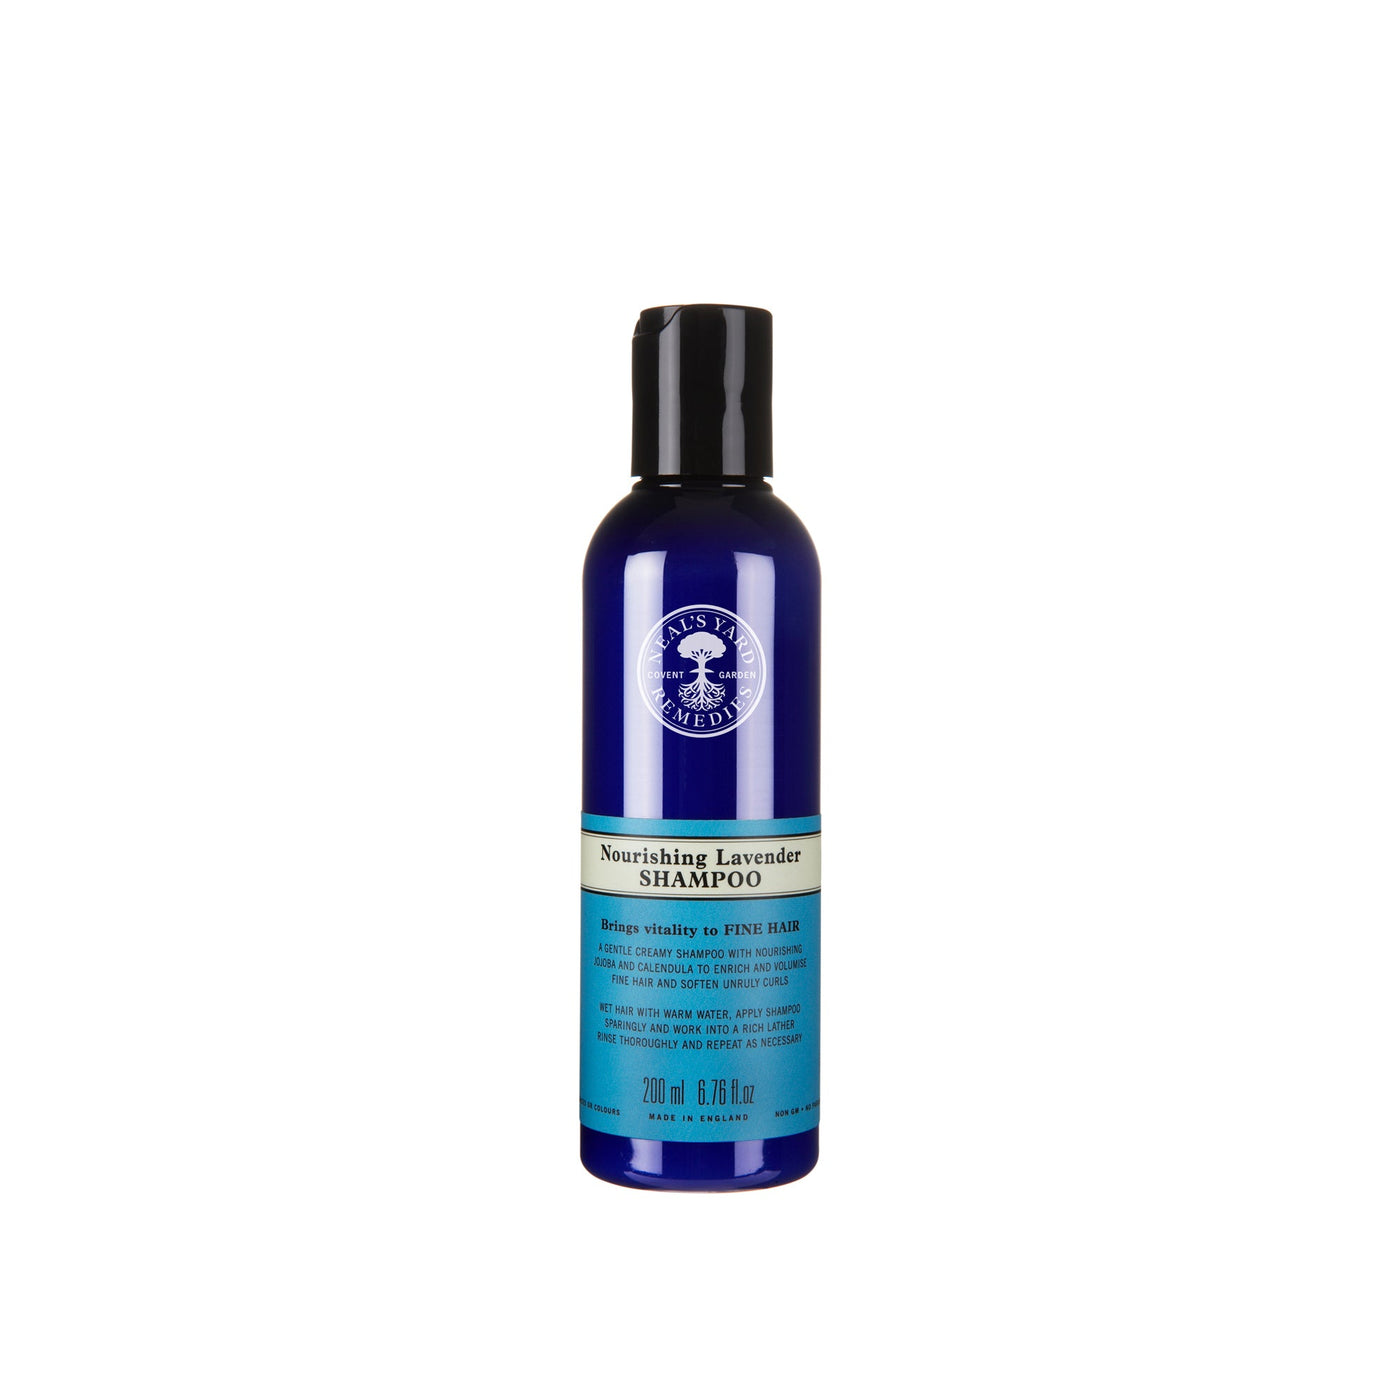 nourishing-lavender-shampoo-front-0832-high-res-2000px.jpg